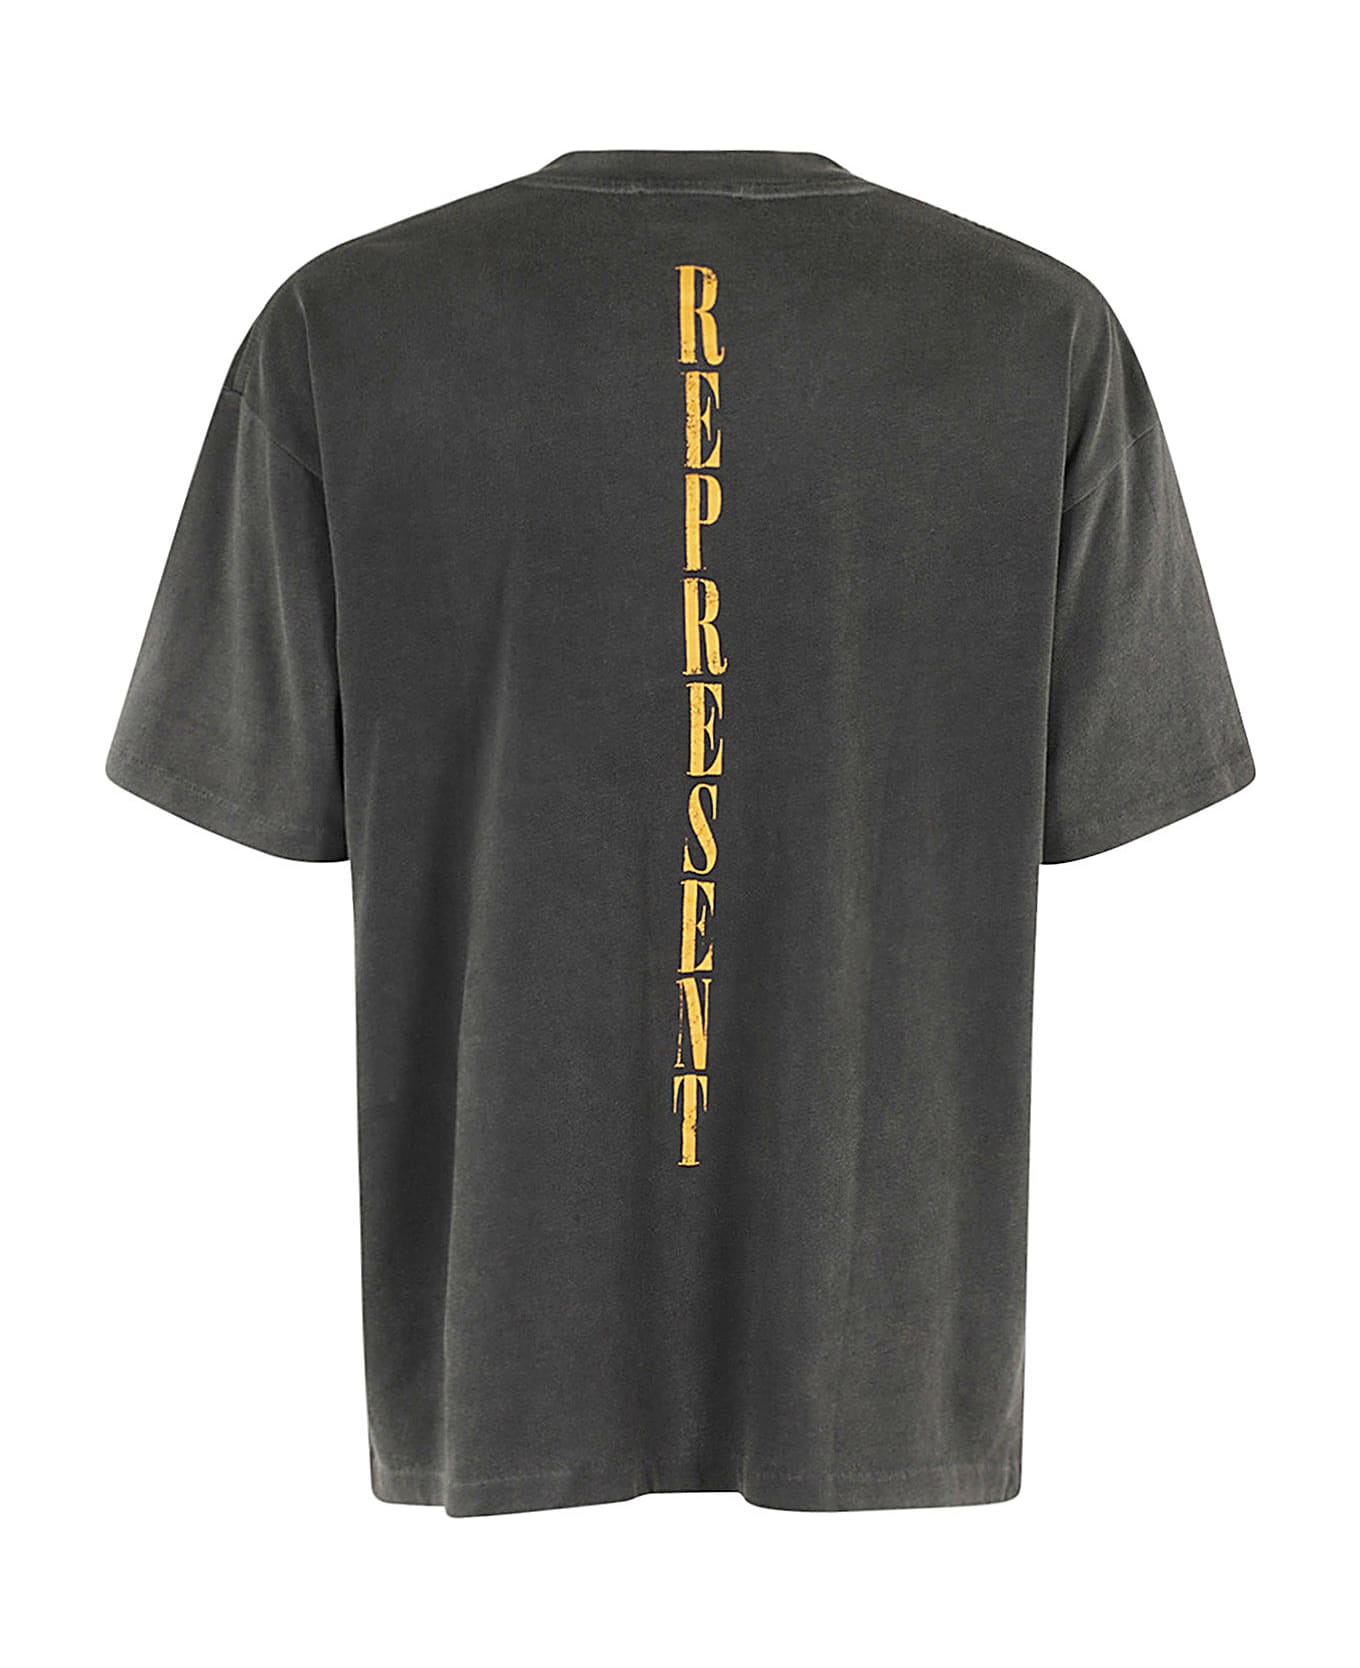 REPRESENT Reborn T Shirt - Aged Black